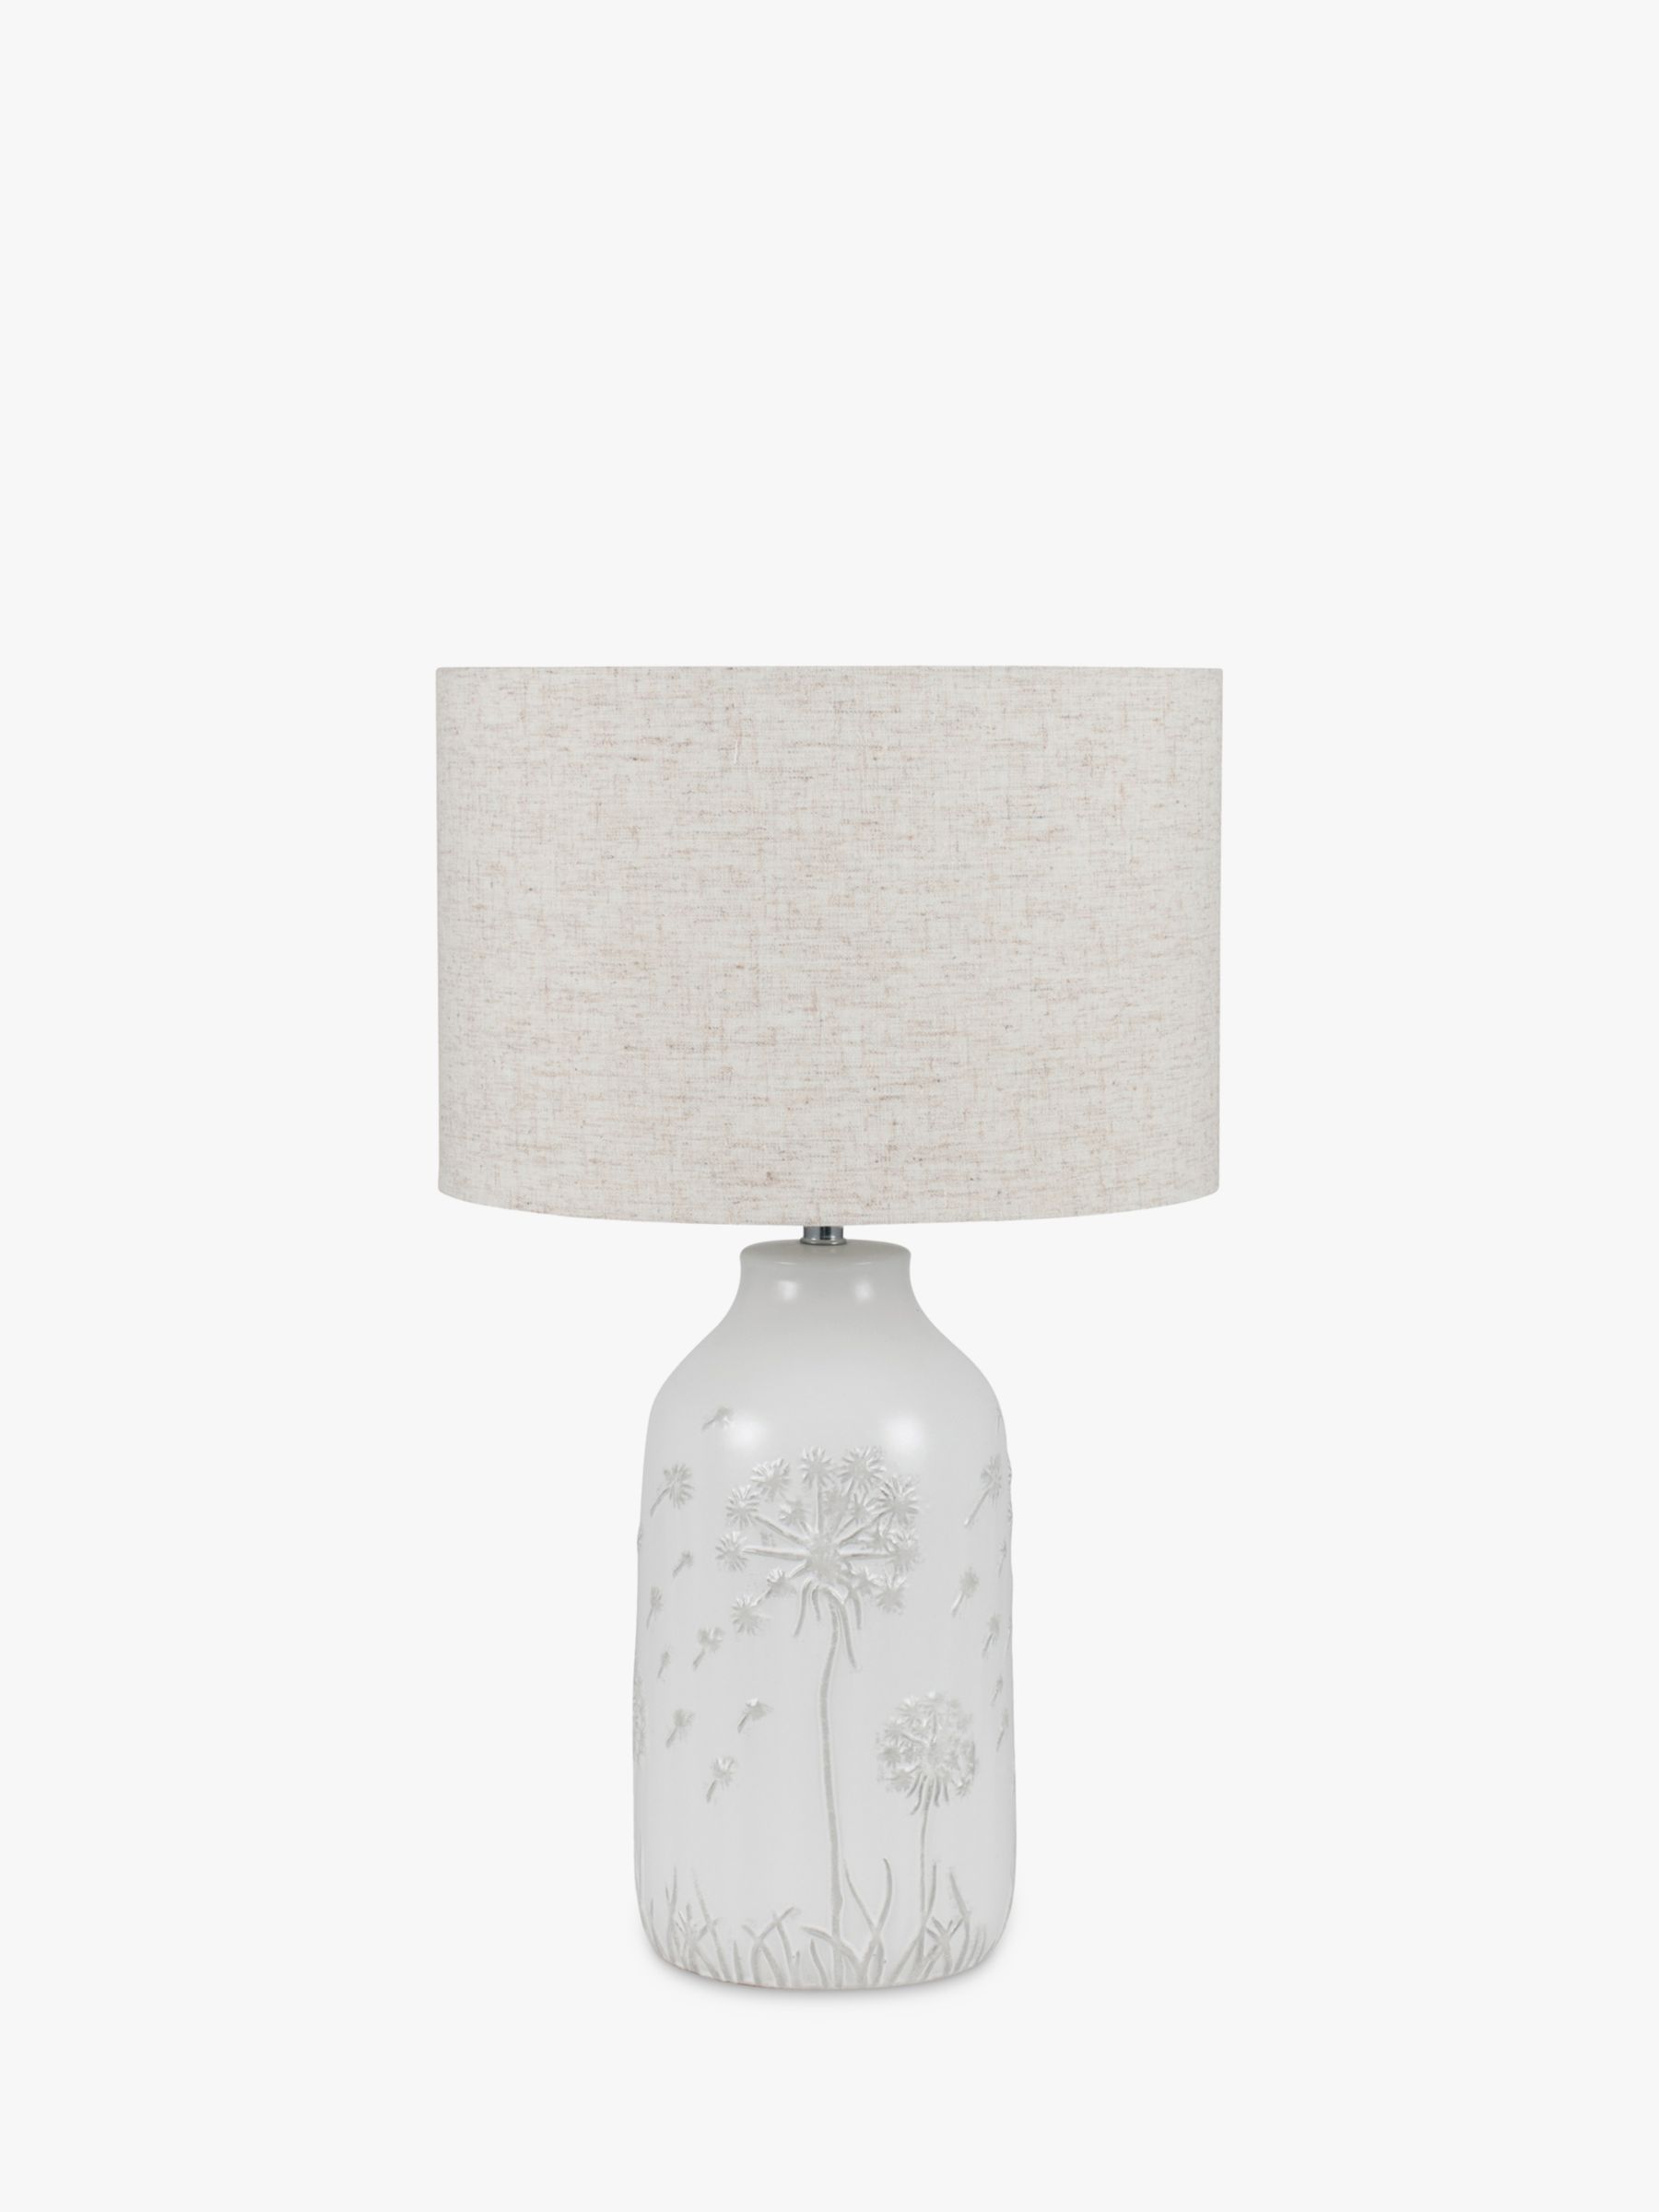 Pacific Lifestyle Flora Ceramic Table Lamp, White